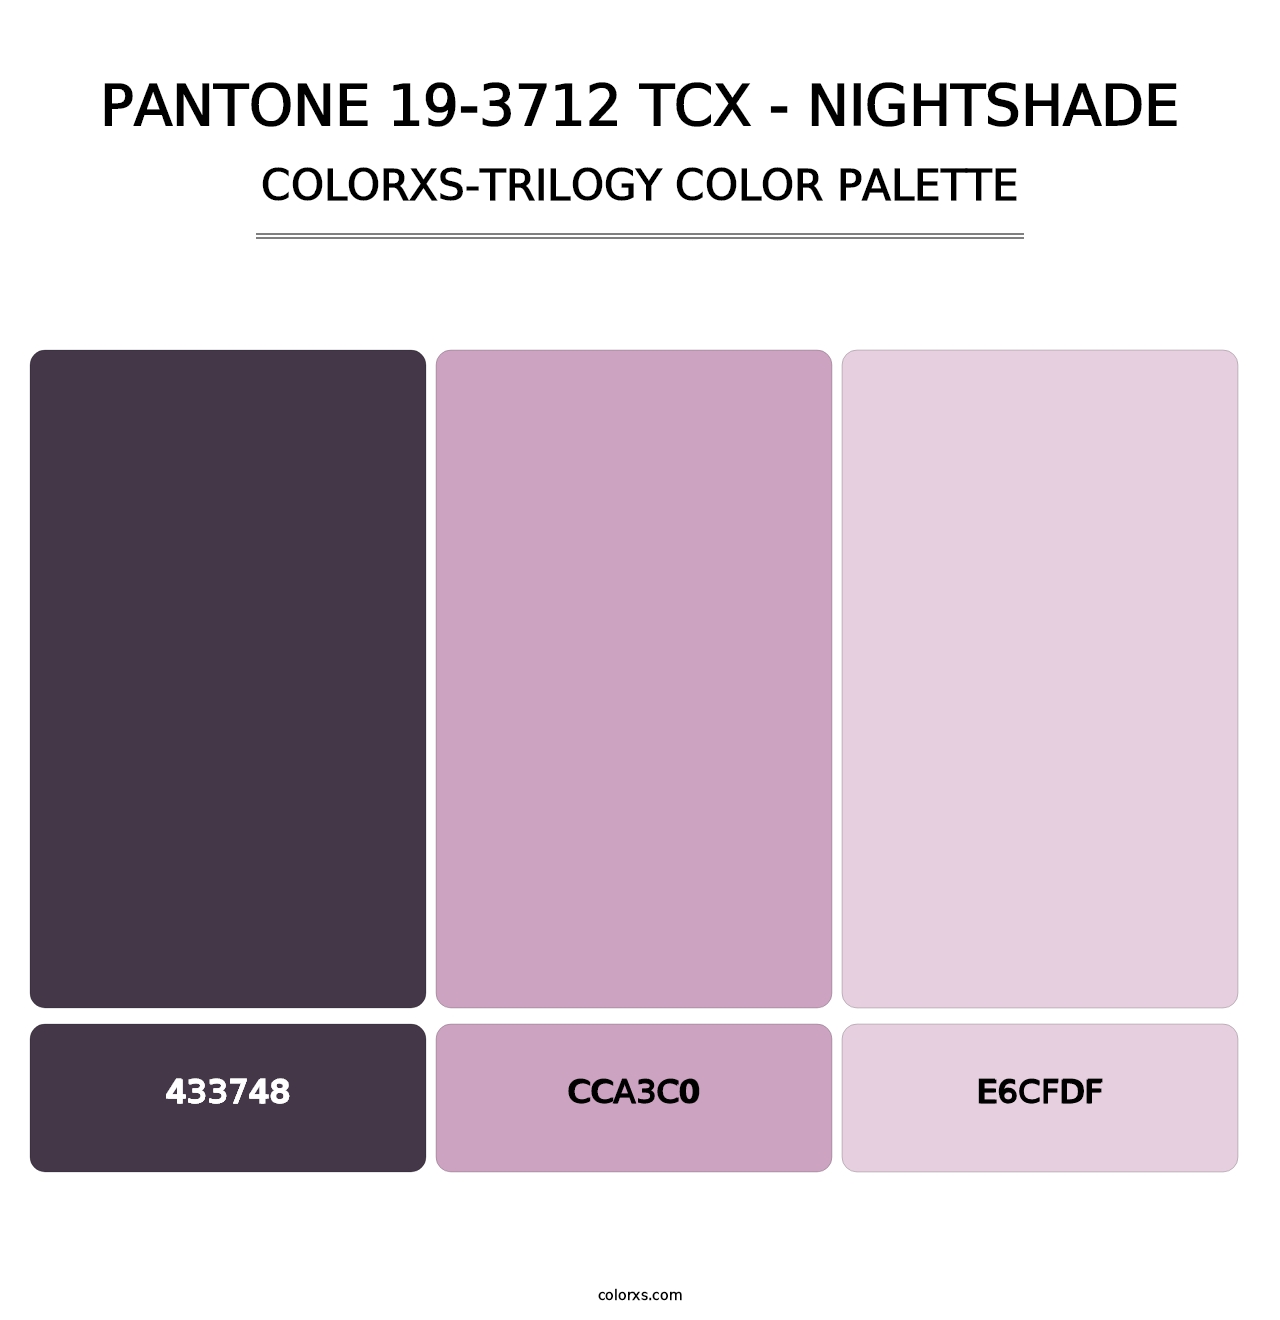 PANTONE 19-3712 TCX - Nightshade - Colorxs Trilogy Palette